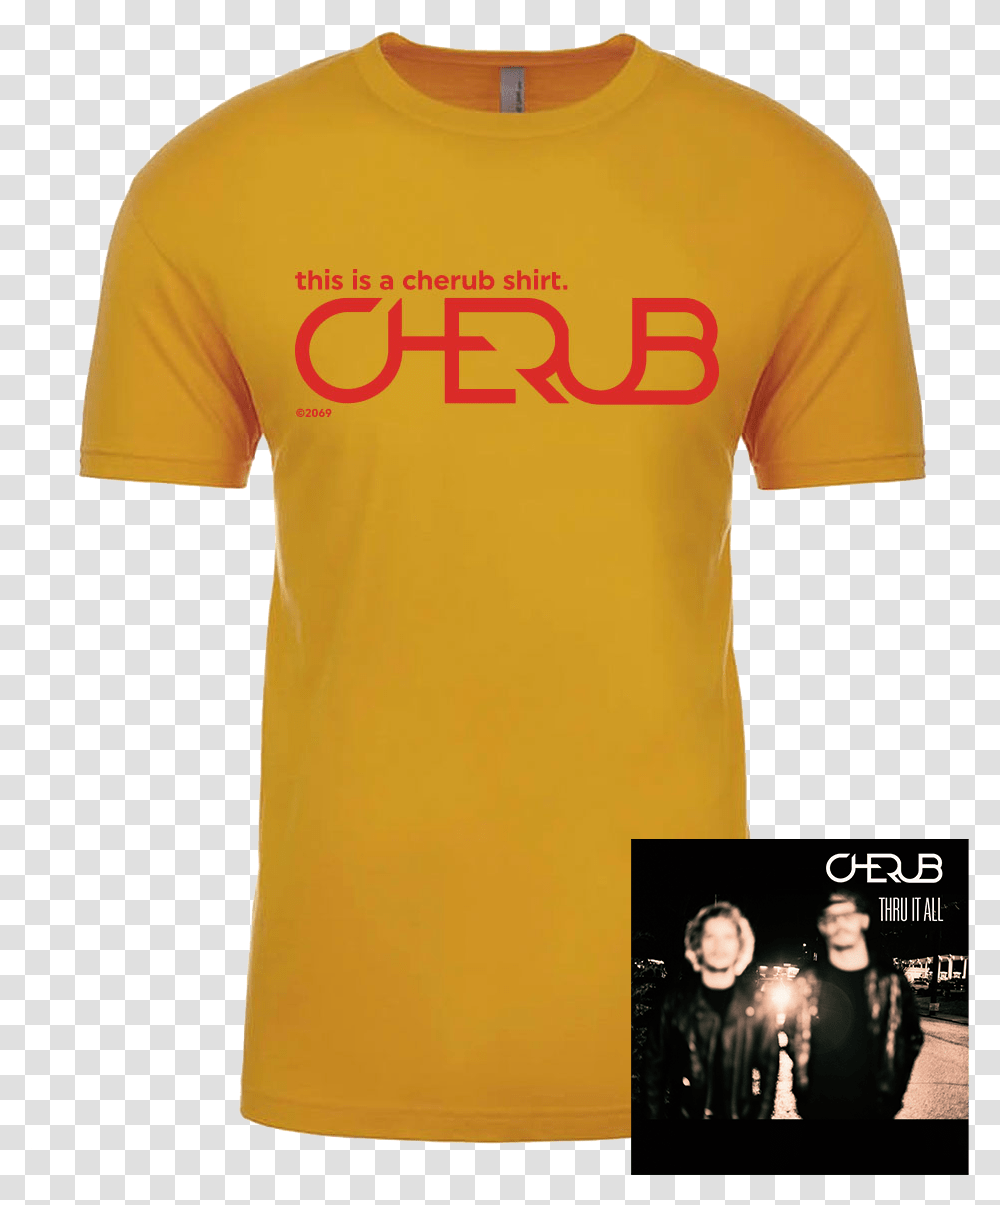 Download Cherub Image With No Cherub, Clothing, Apparel, Person, Human Transparent Png